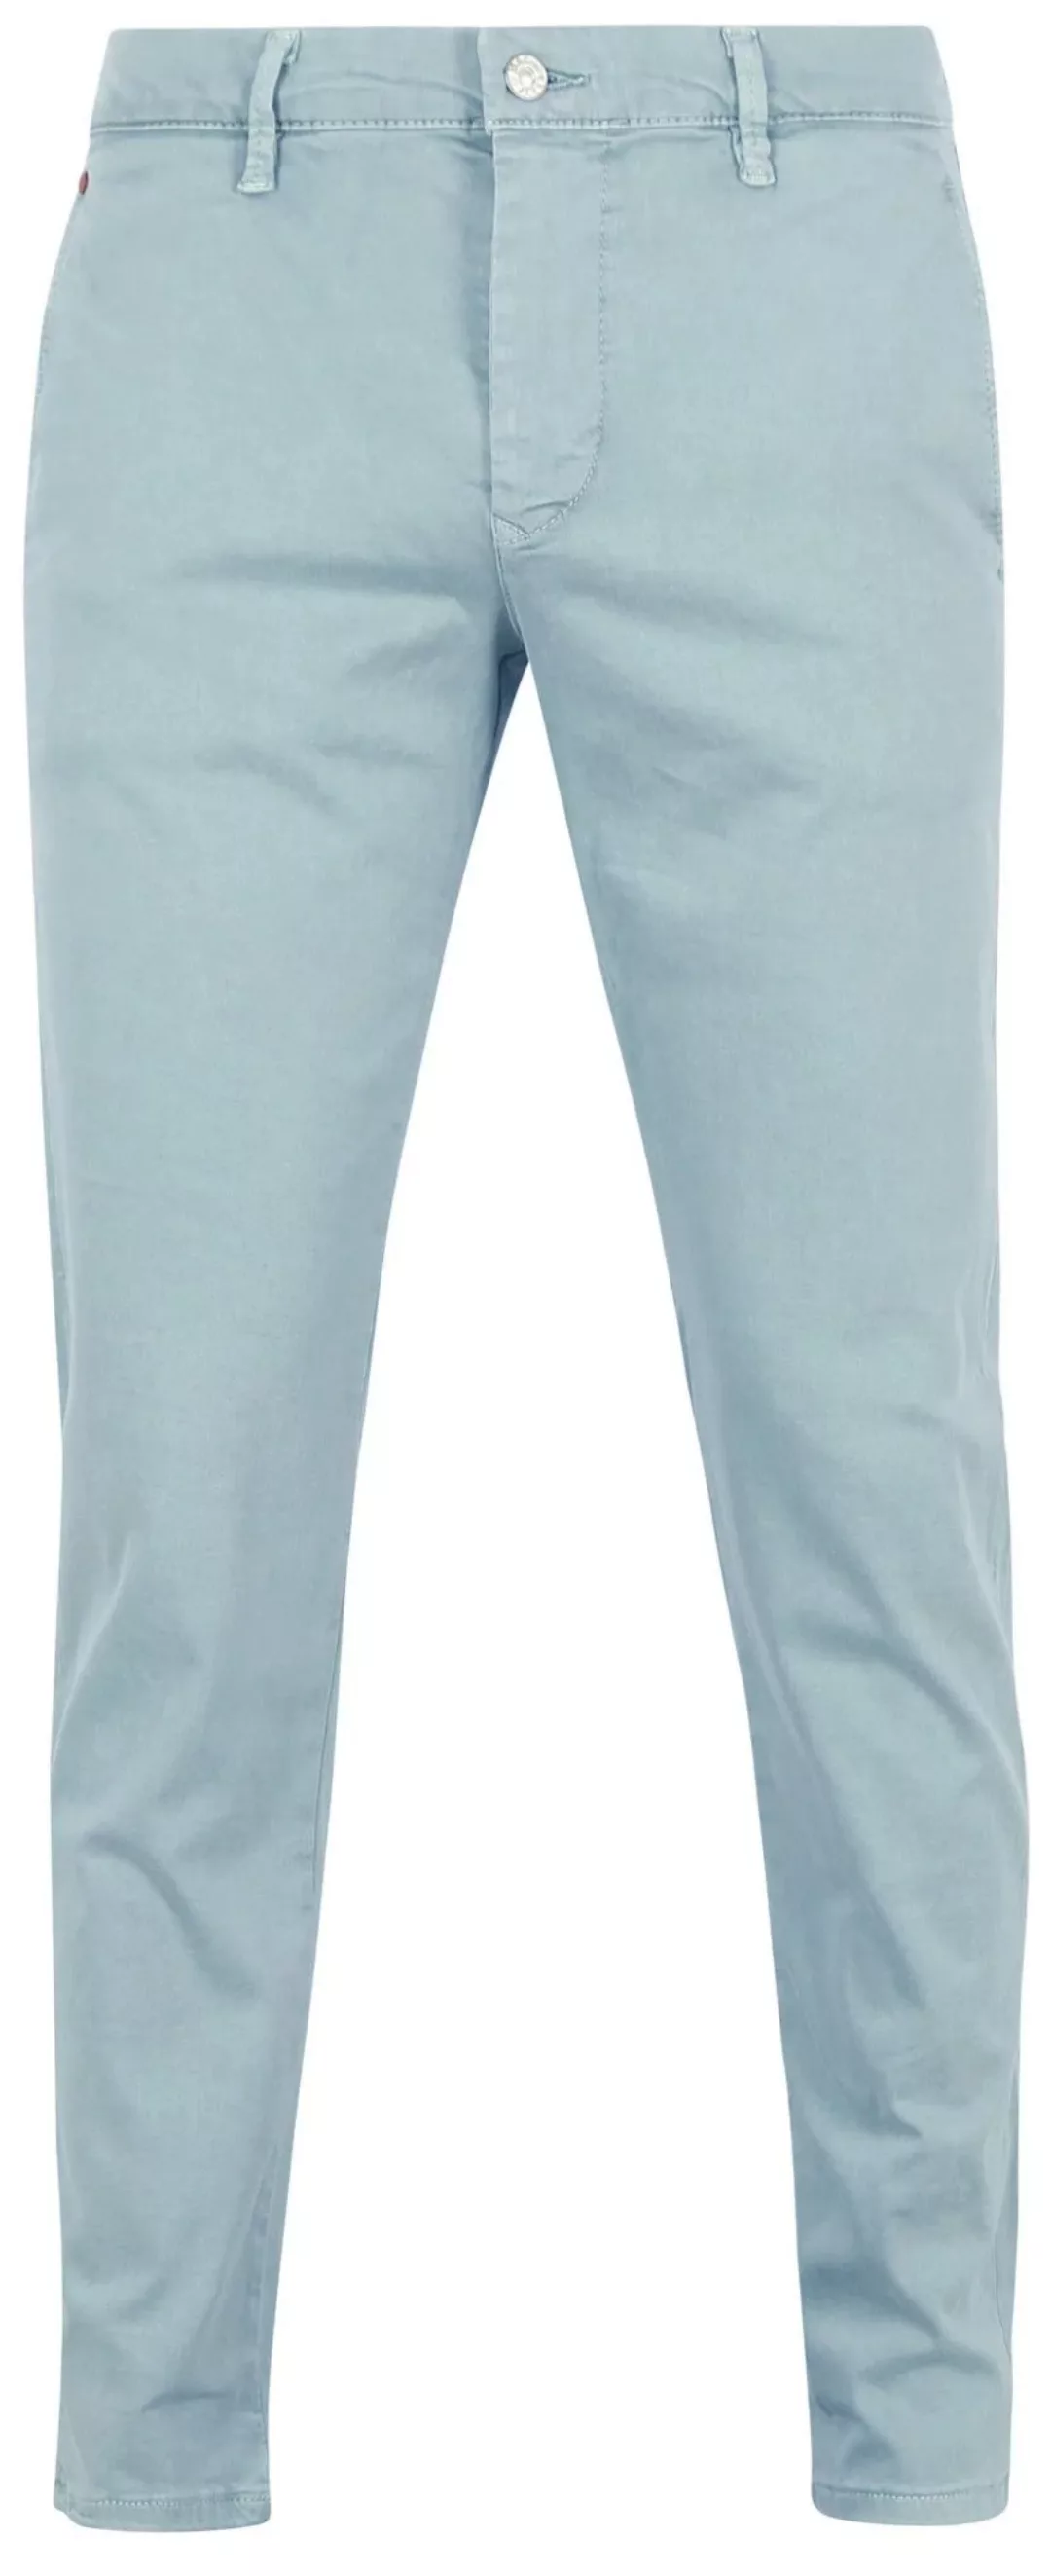 Mac Jeans Driver Pants Hellblau - Größe W 36 - L 30 günstig online kaufen